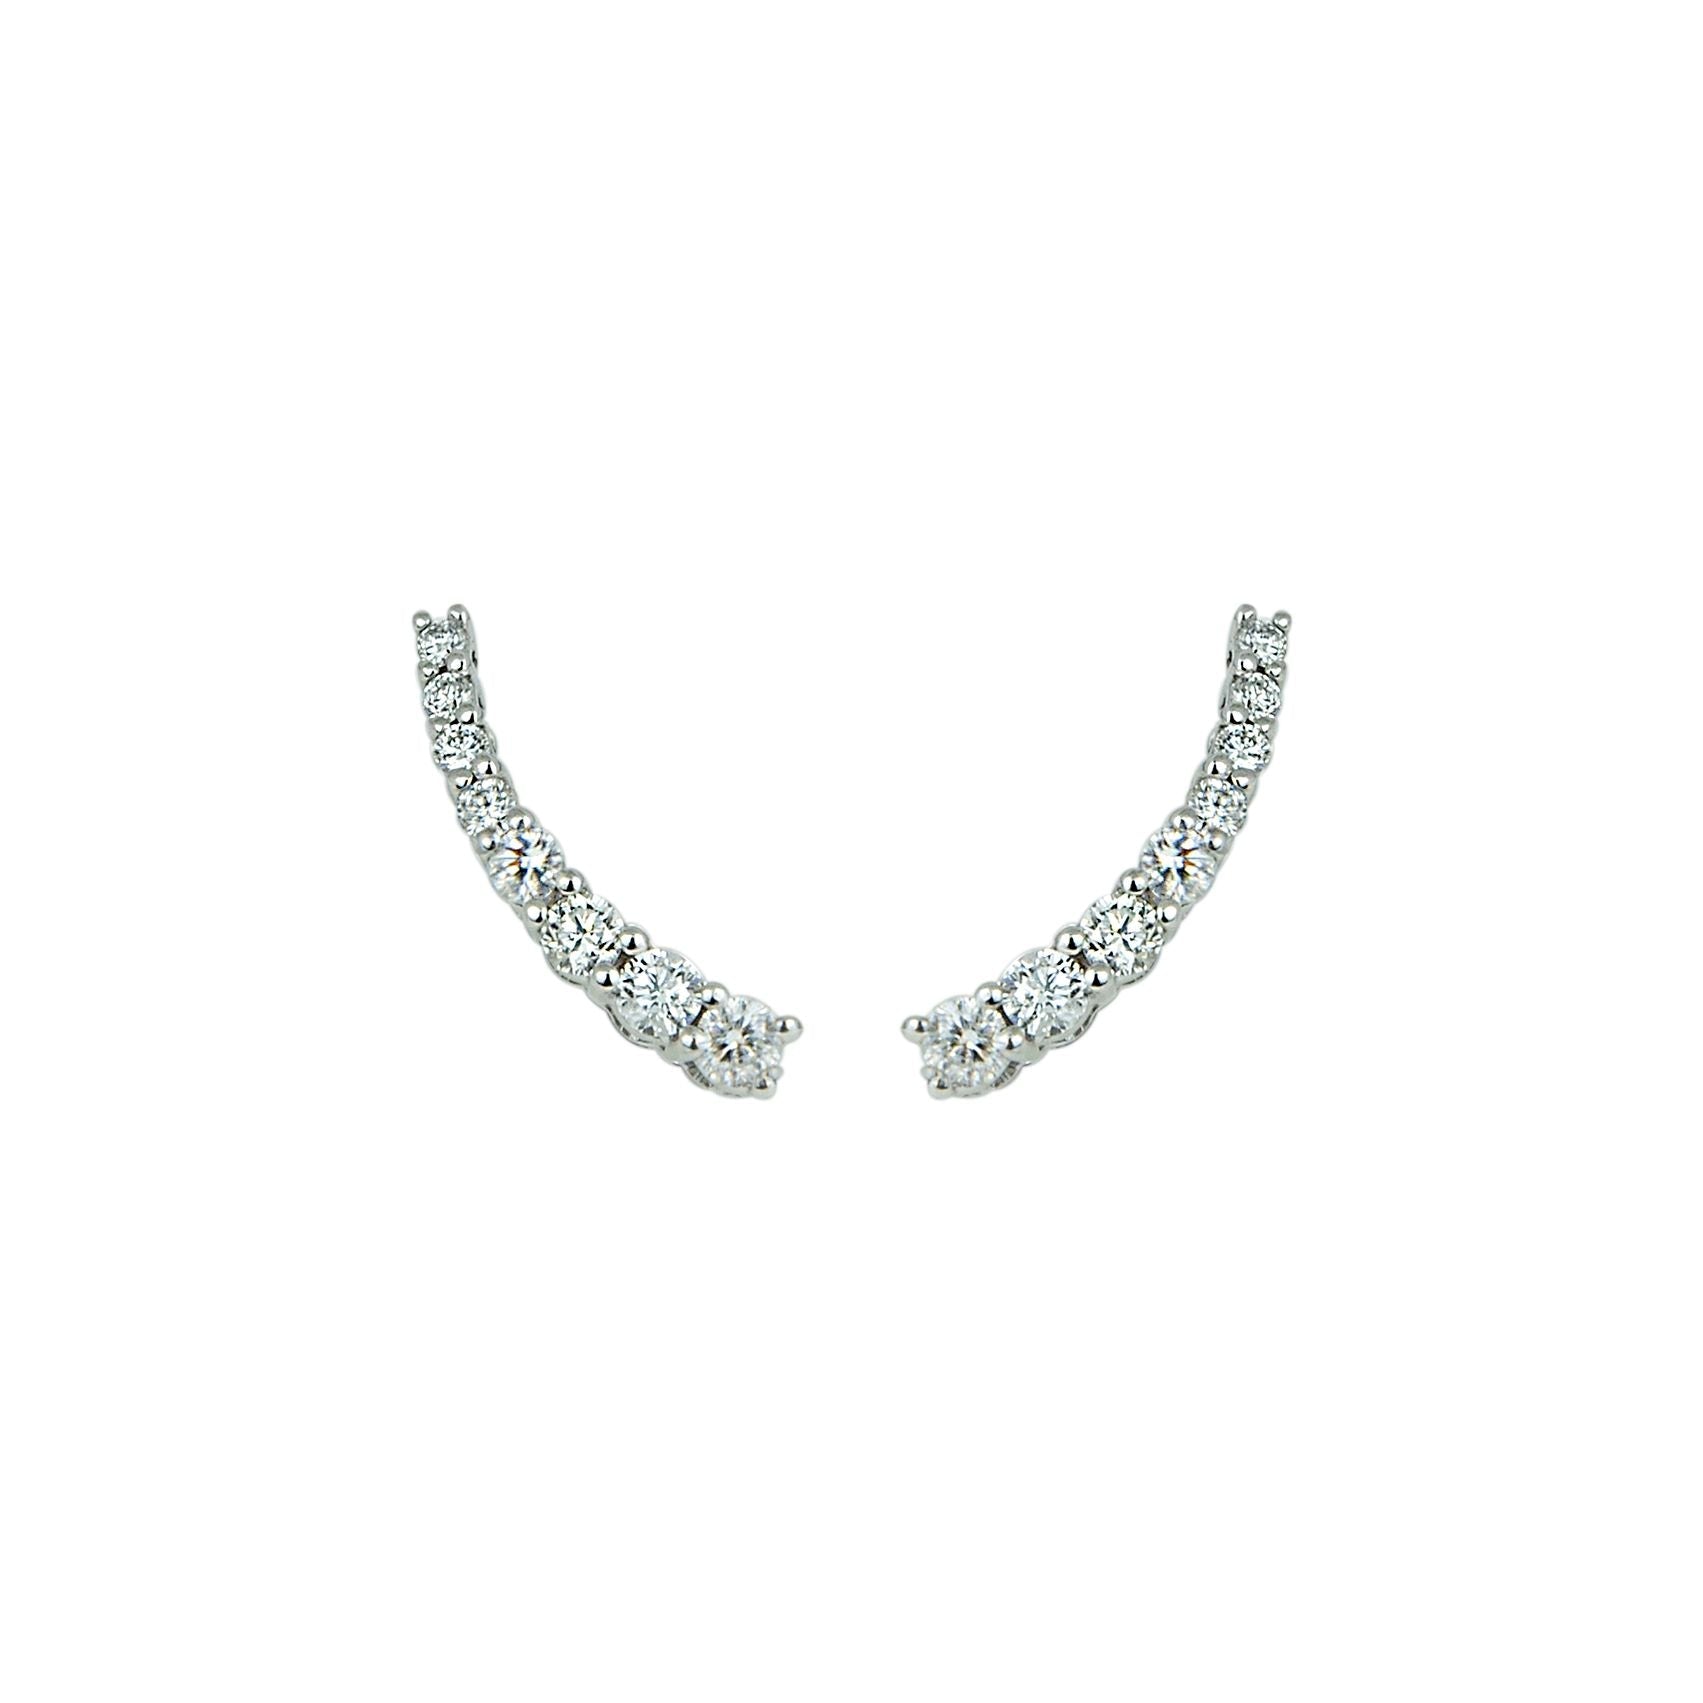 Brinco Ear Cuff Universo | Ouro Branco 18K E Diamantes - Jack Vartanian - Ear Cuffs